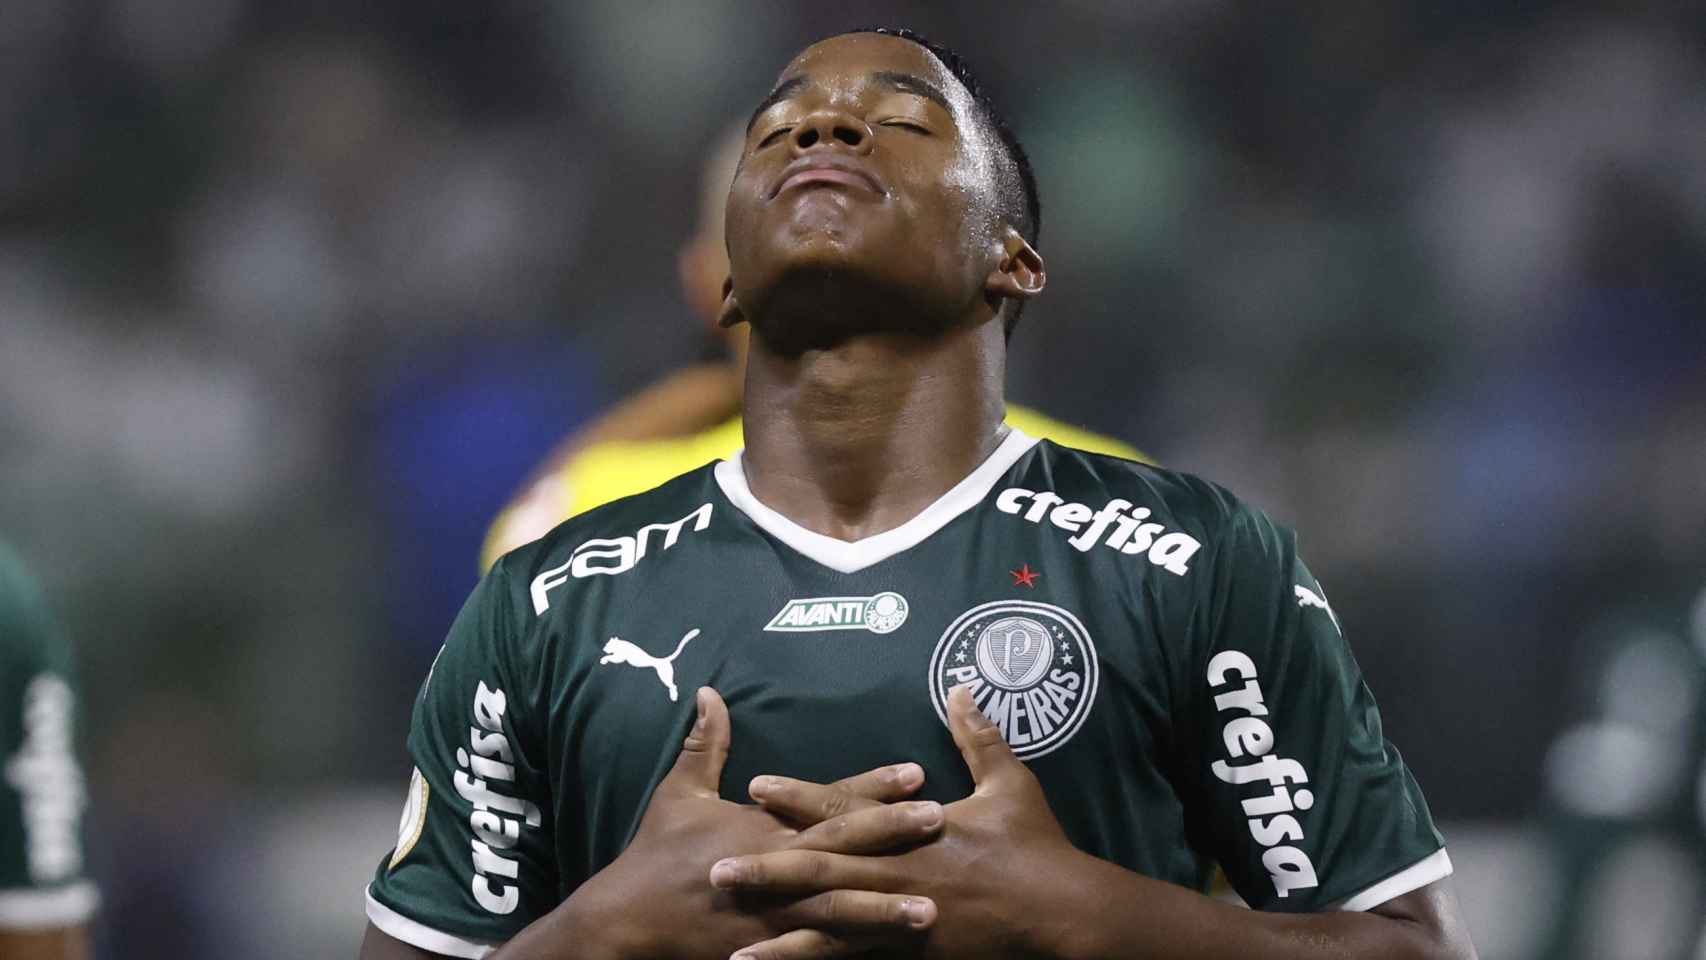 Endrick celebra un gol con el Palmeiras